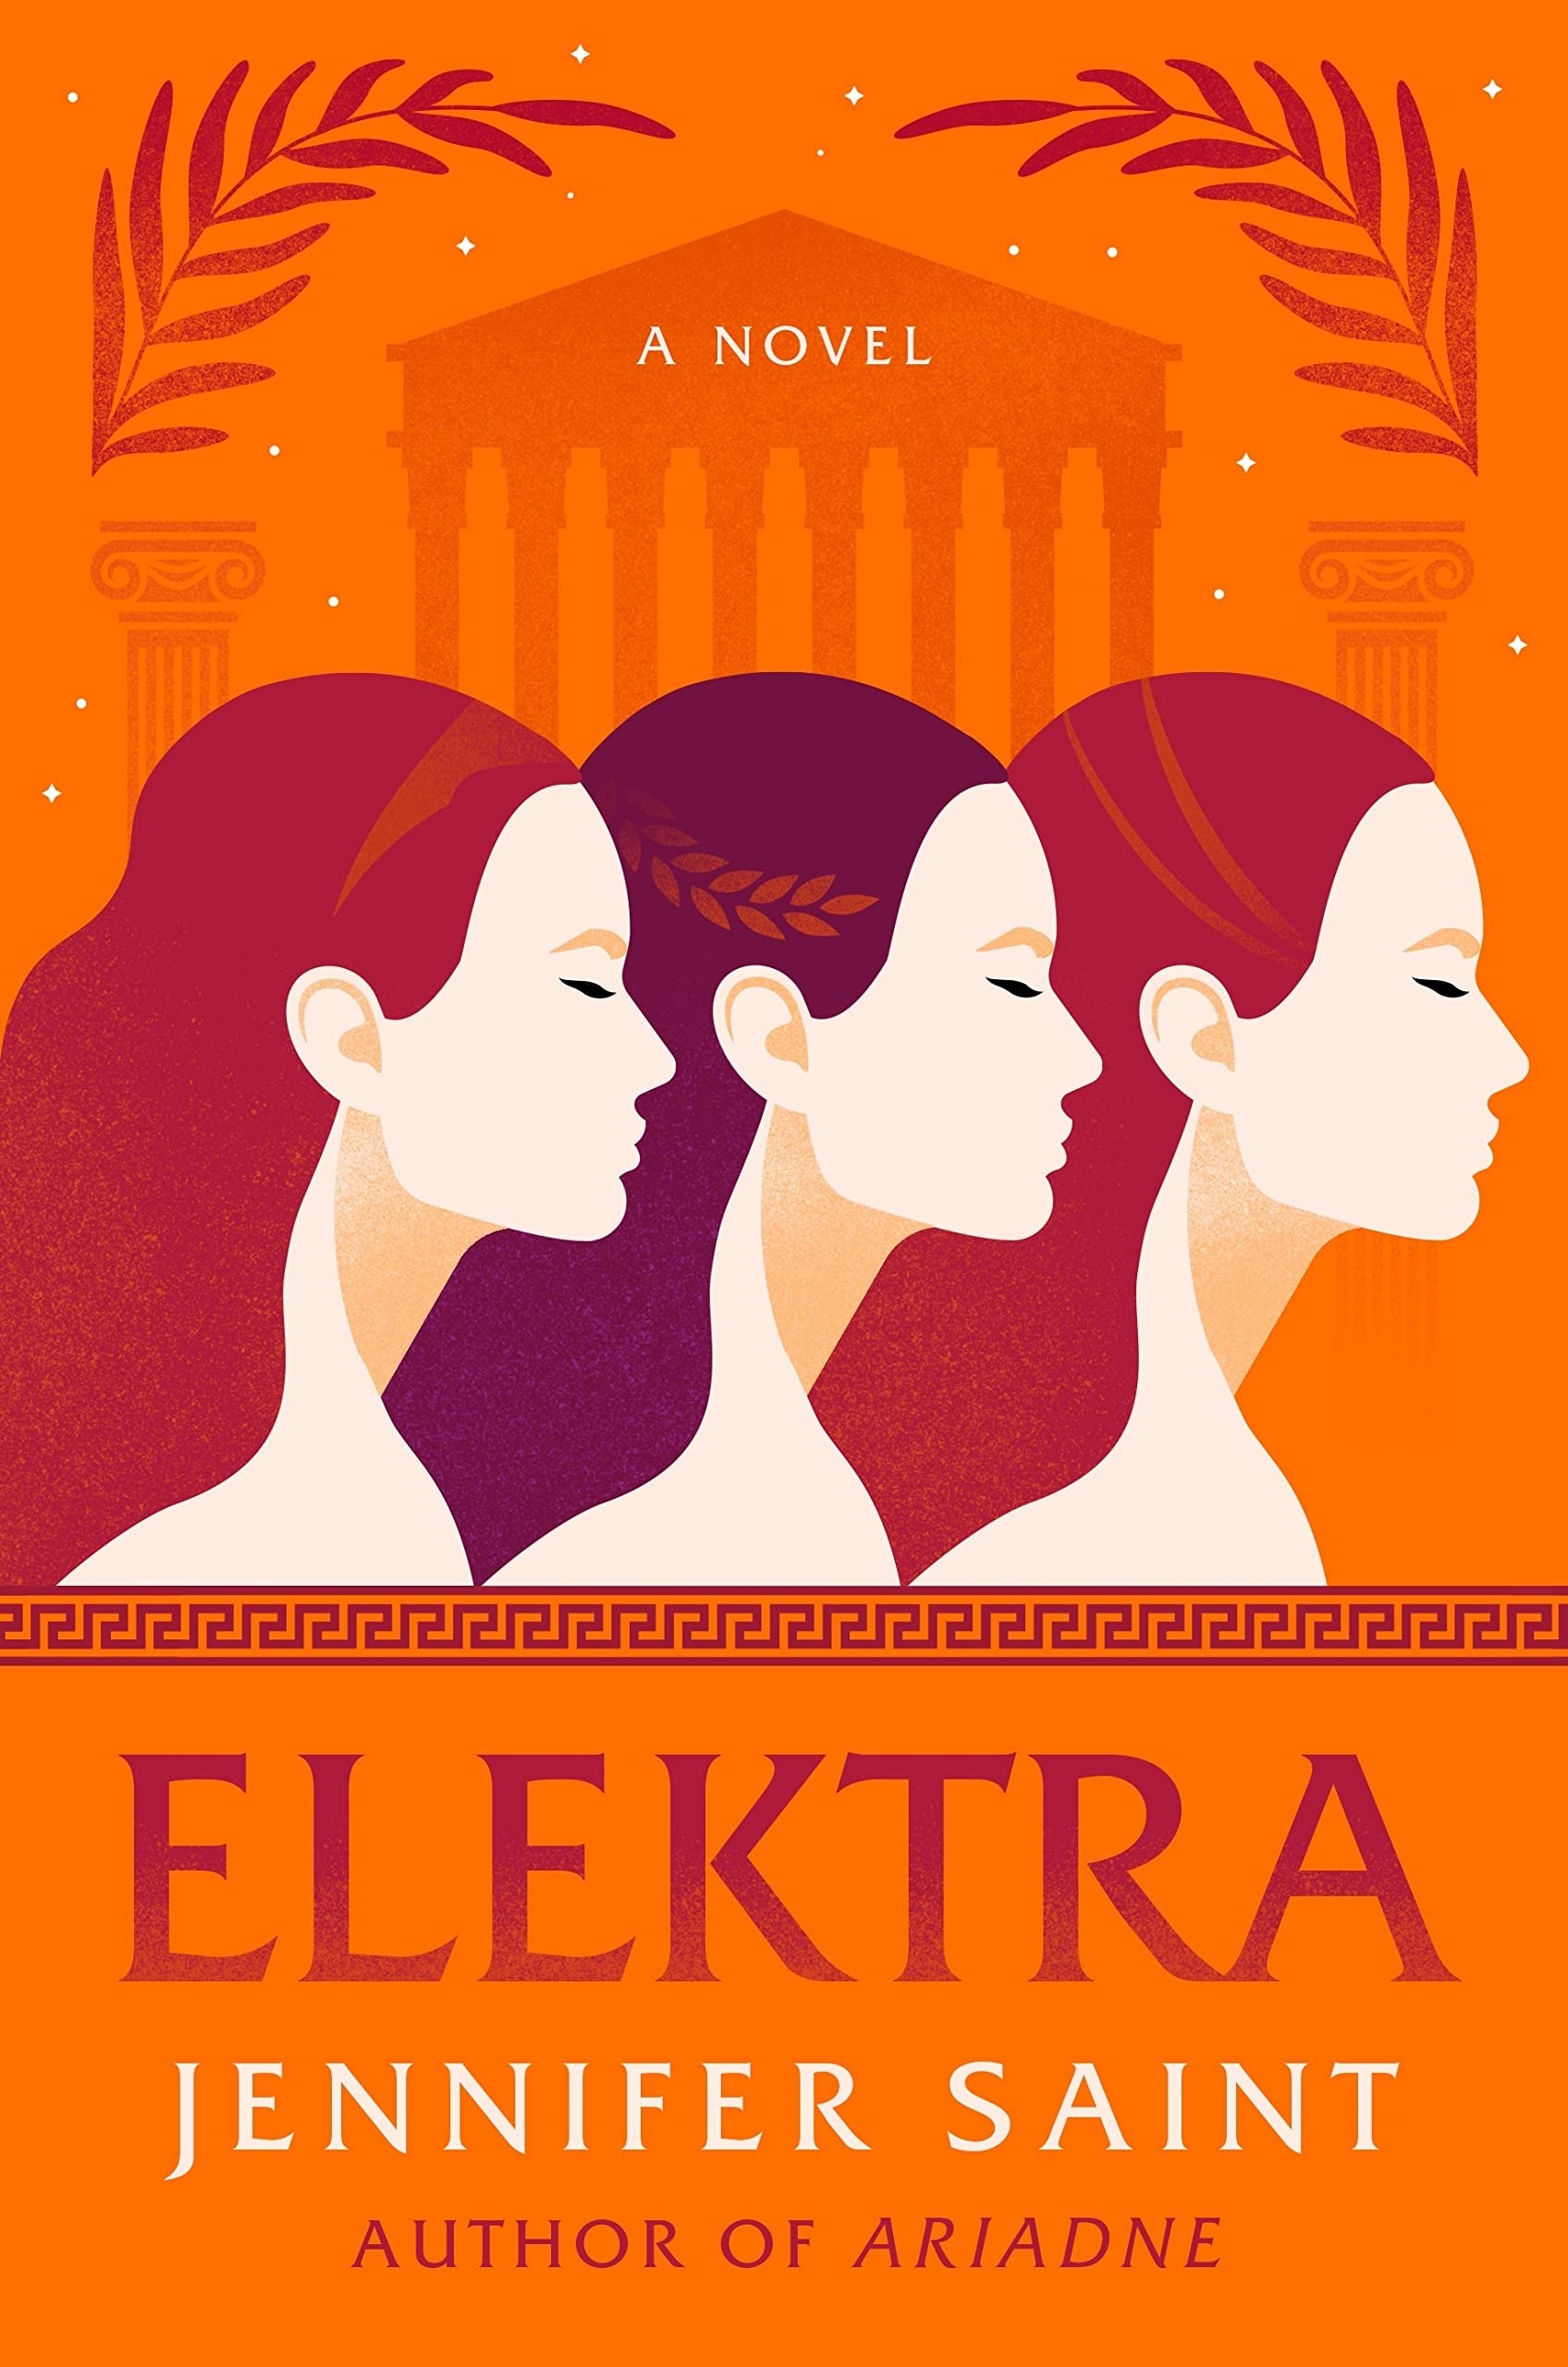 &quot;Elektra&quot; cover illustration of three identical women